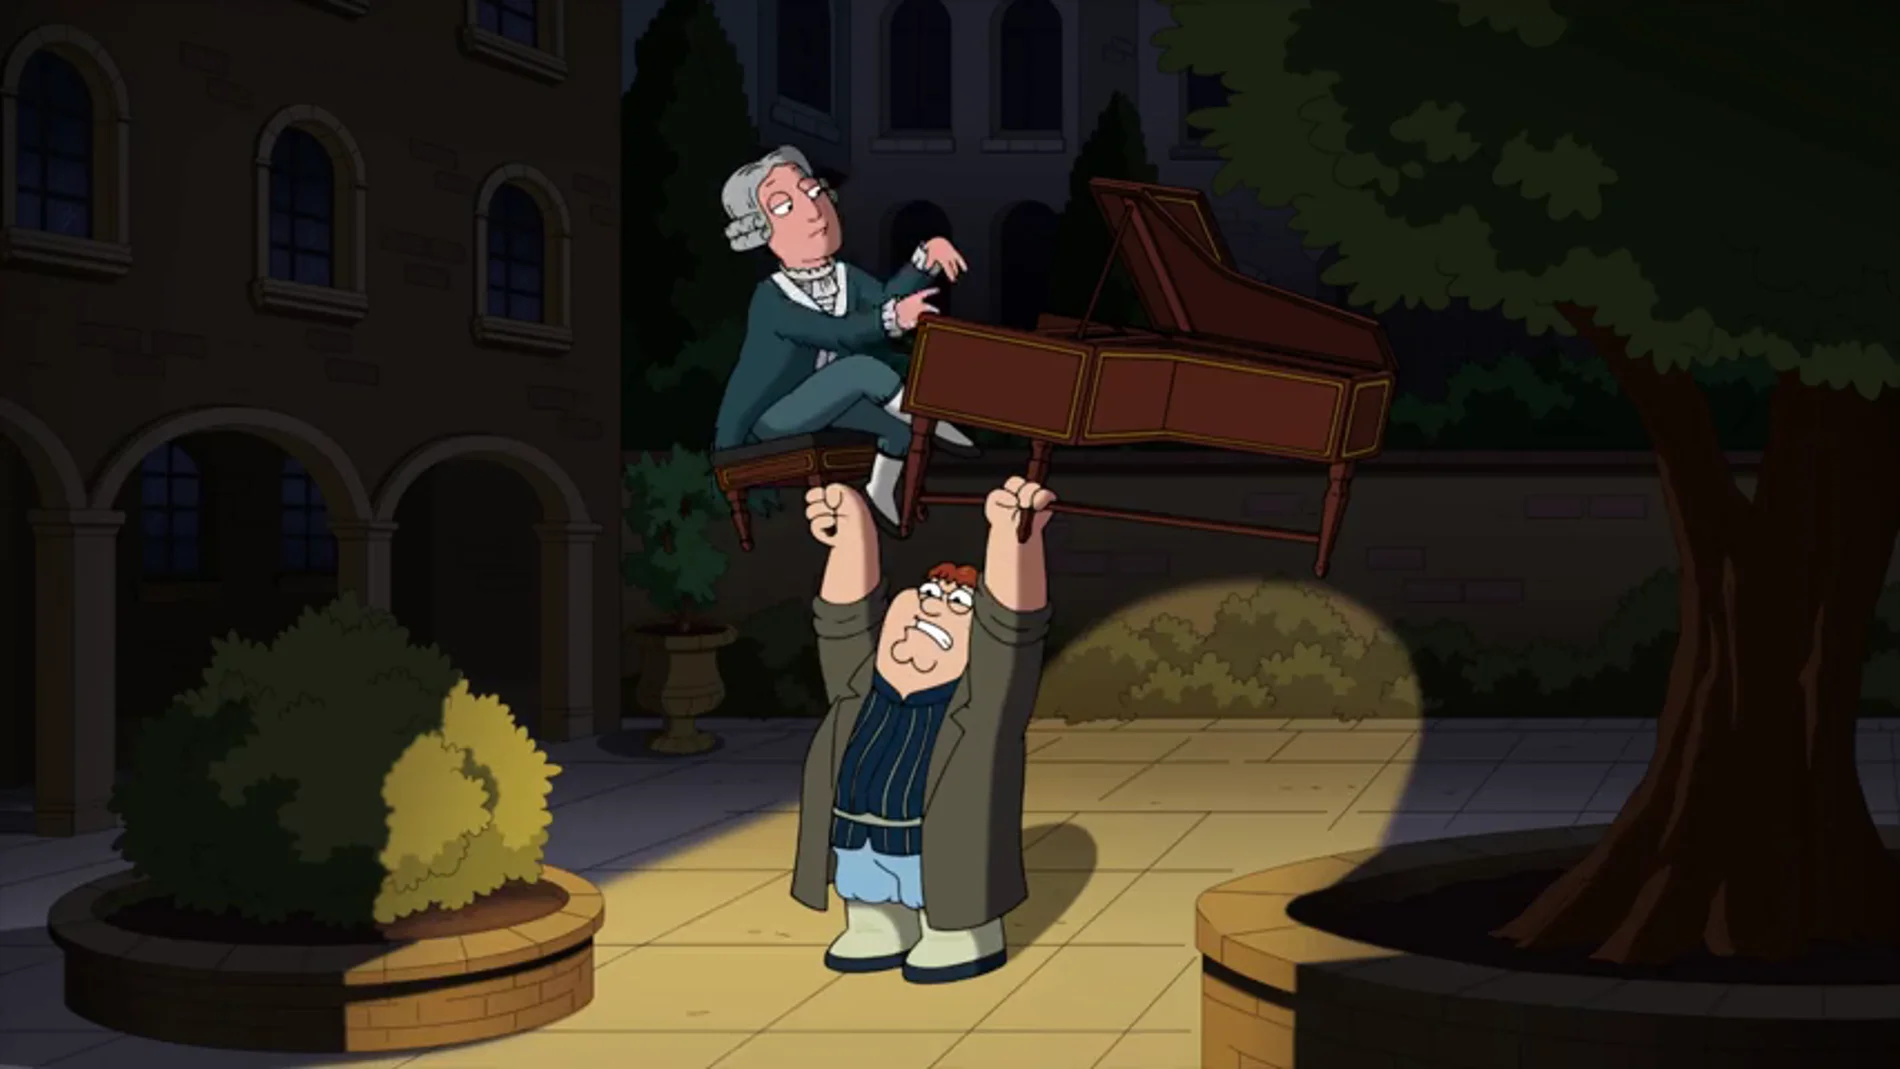 Peter trata de conquistar a Lois como en 'Romeo y Julieta'